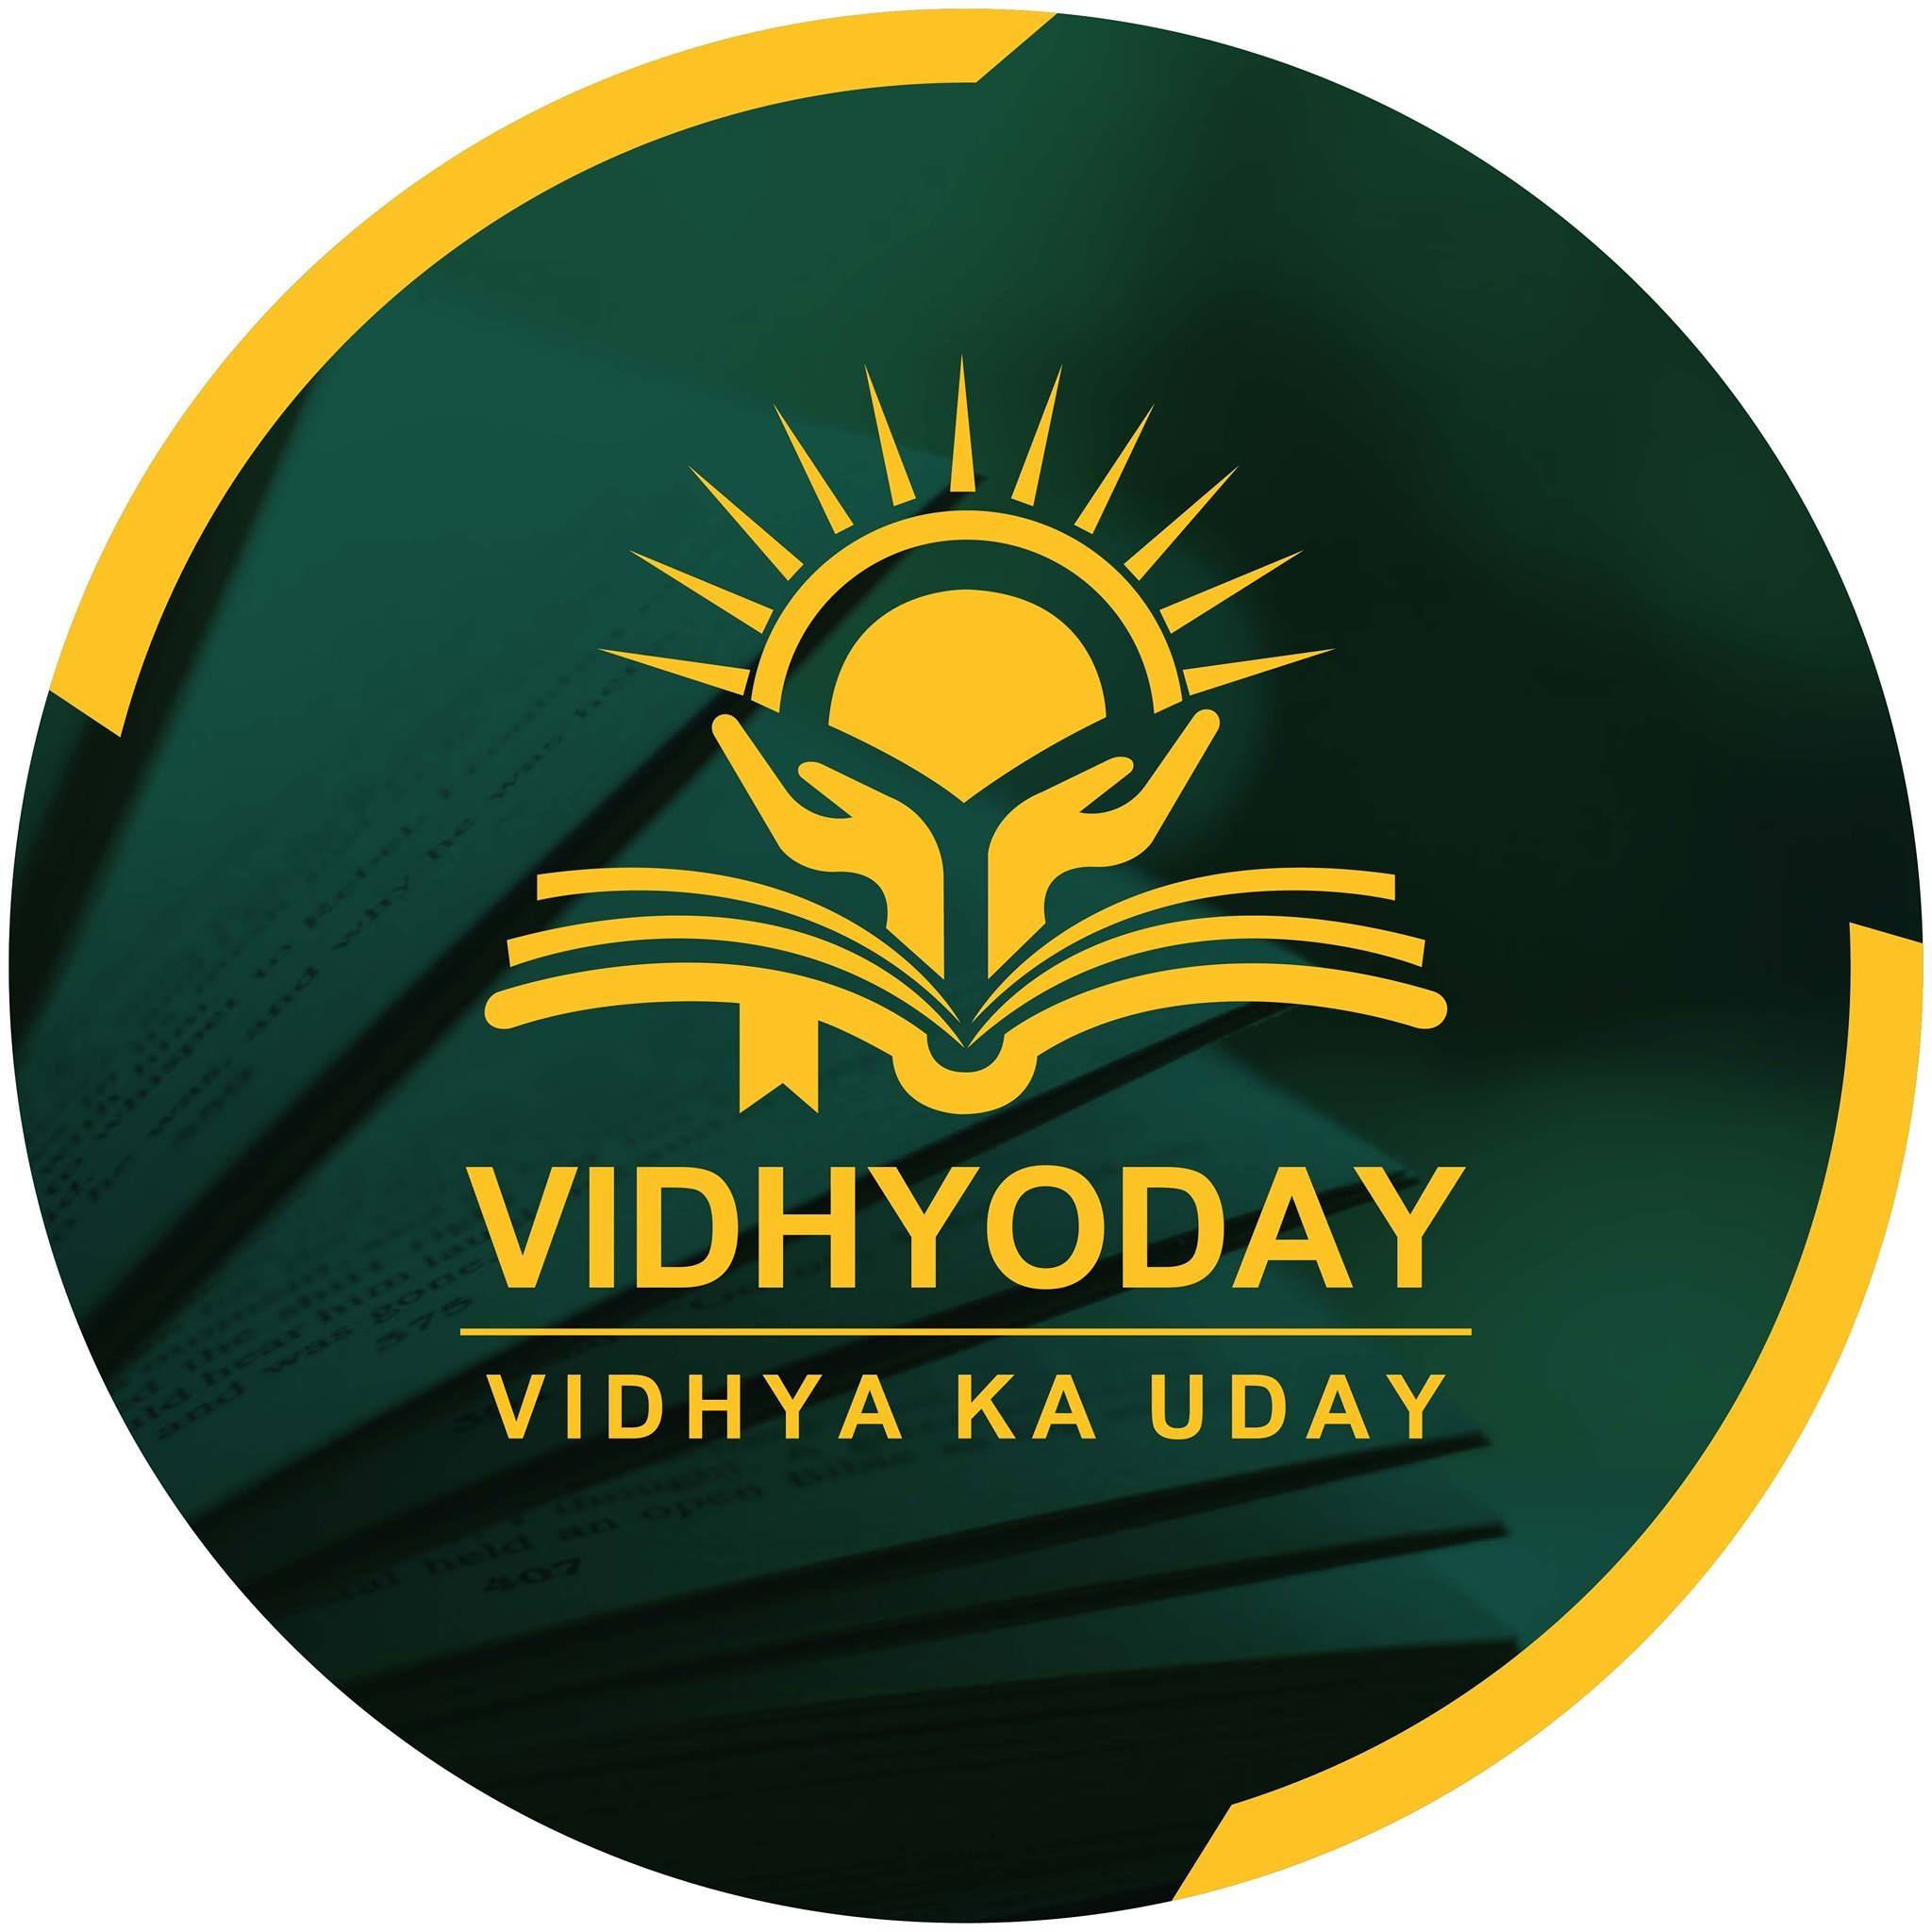 Vidhyoday